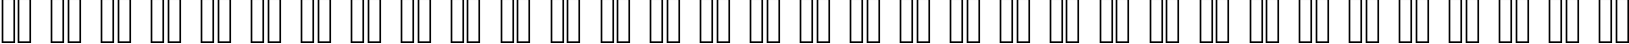 Пример написания русского алфавита шрифтом Copperplate Gothic Bold